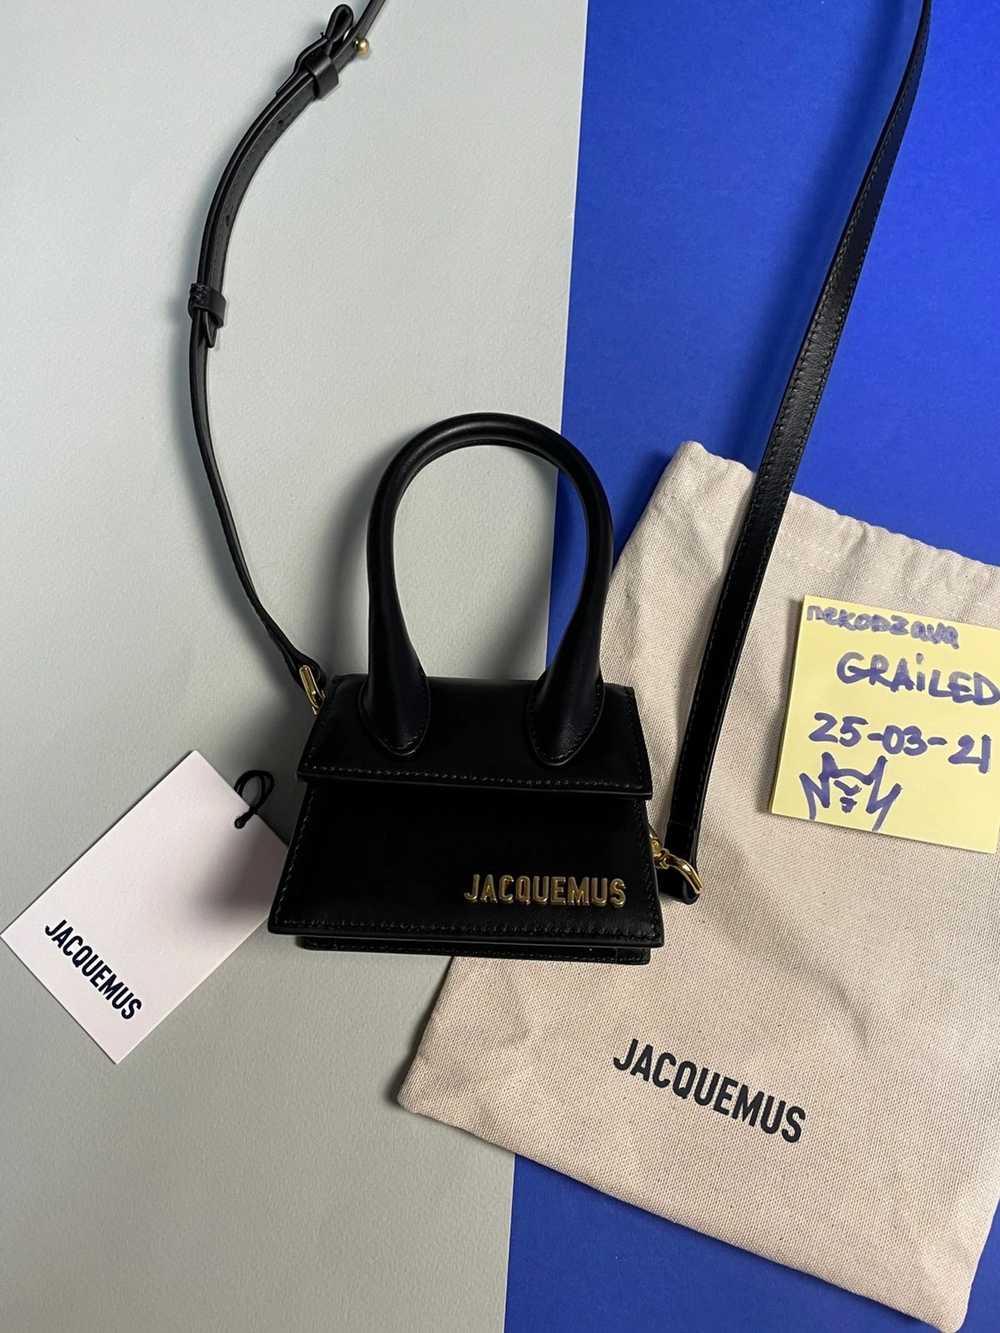 Jacquemus Jacquemus Le Chiquito Black Leather Bag - image 2